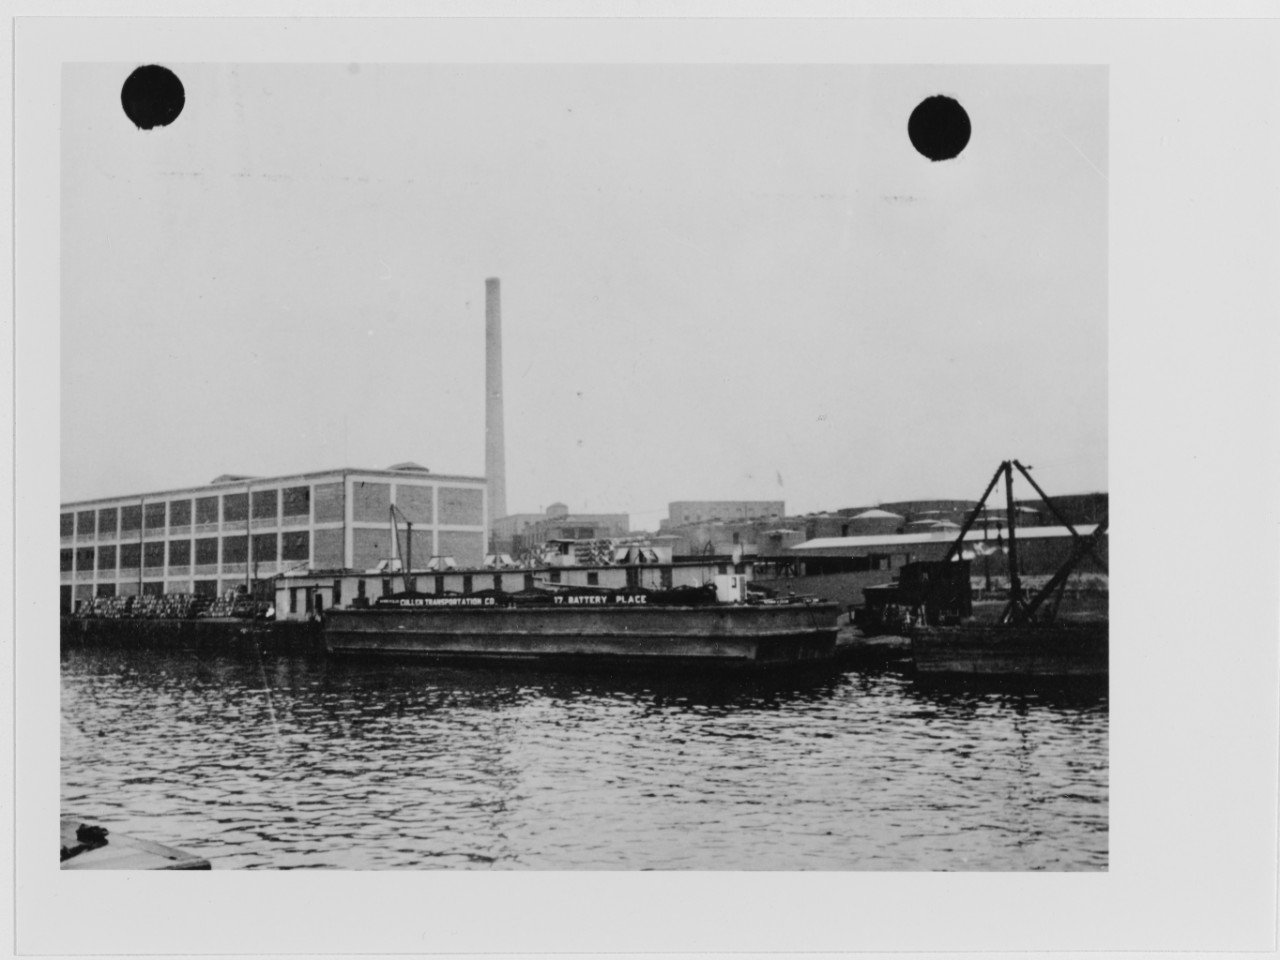 KATHERINE W. CULLEN (U.S. Barge, 1903). USS KATHERINE W. CULLEN (ID-3223)